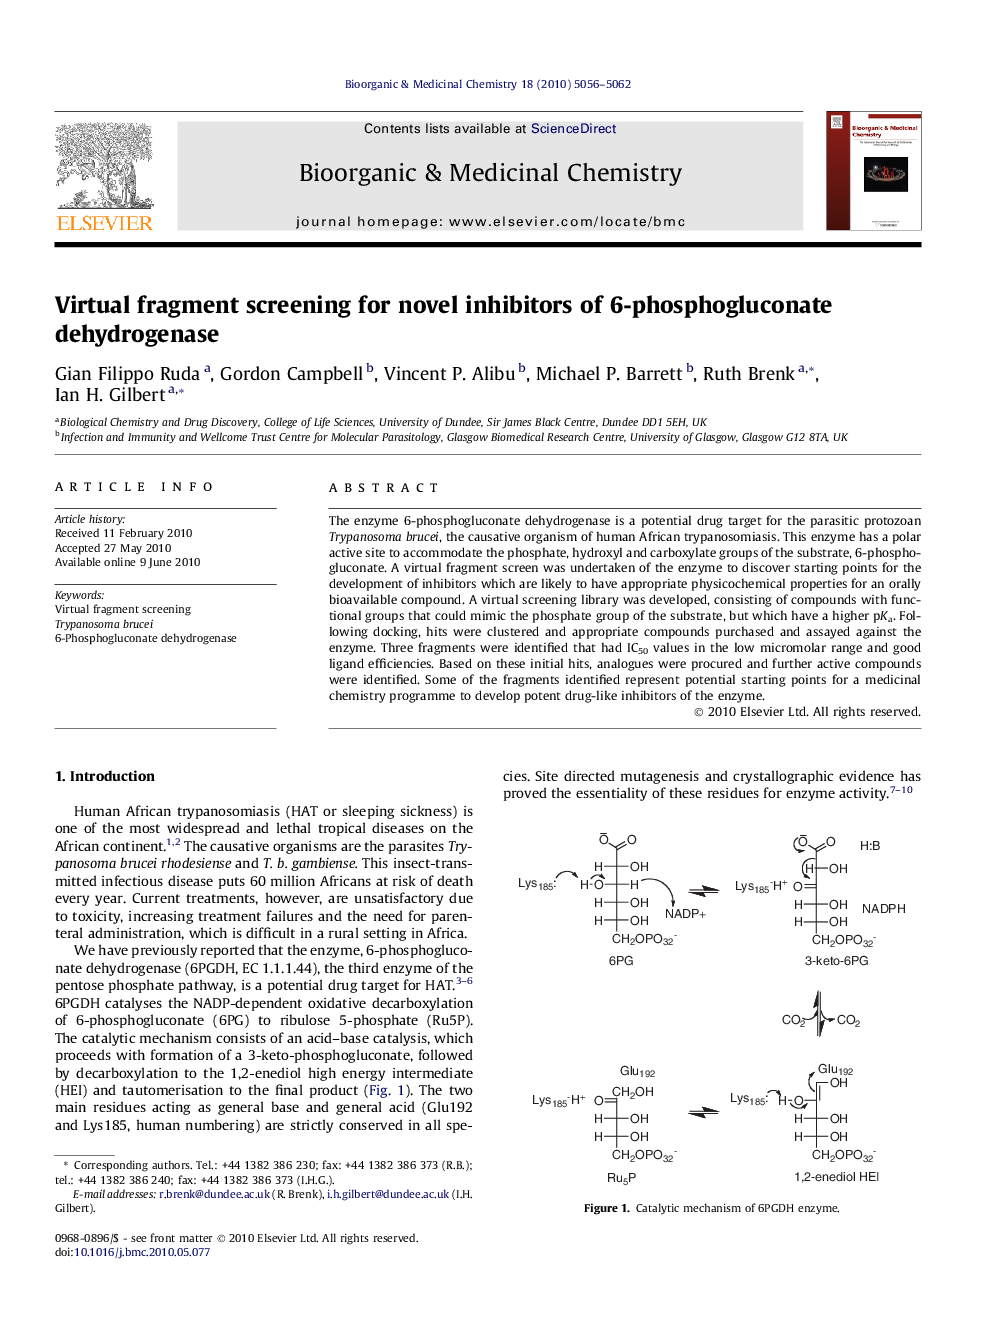 Virtual fragment screening for novel inhibitors of 6-phosphogluconate dehydrogenase